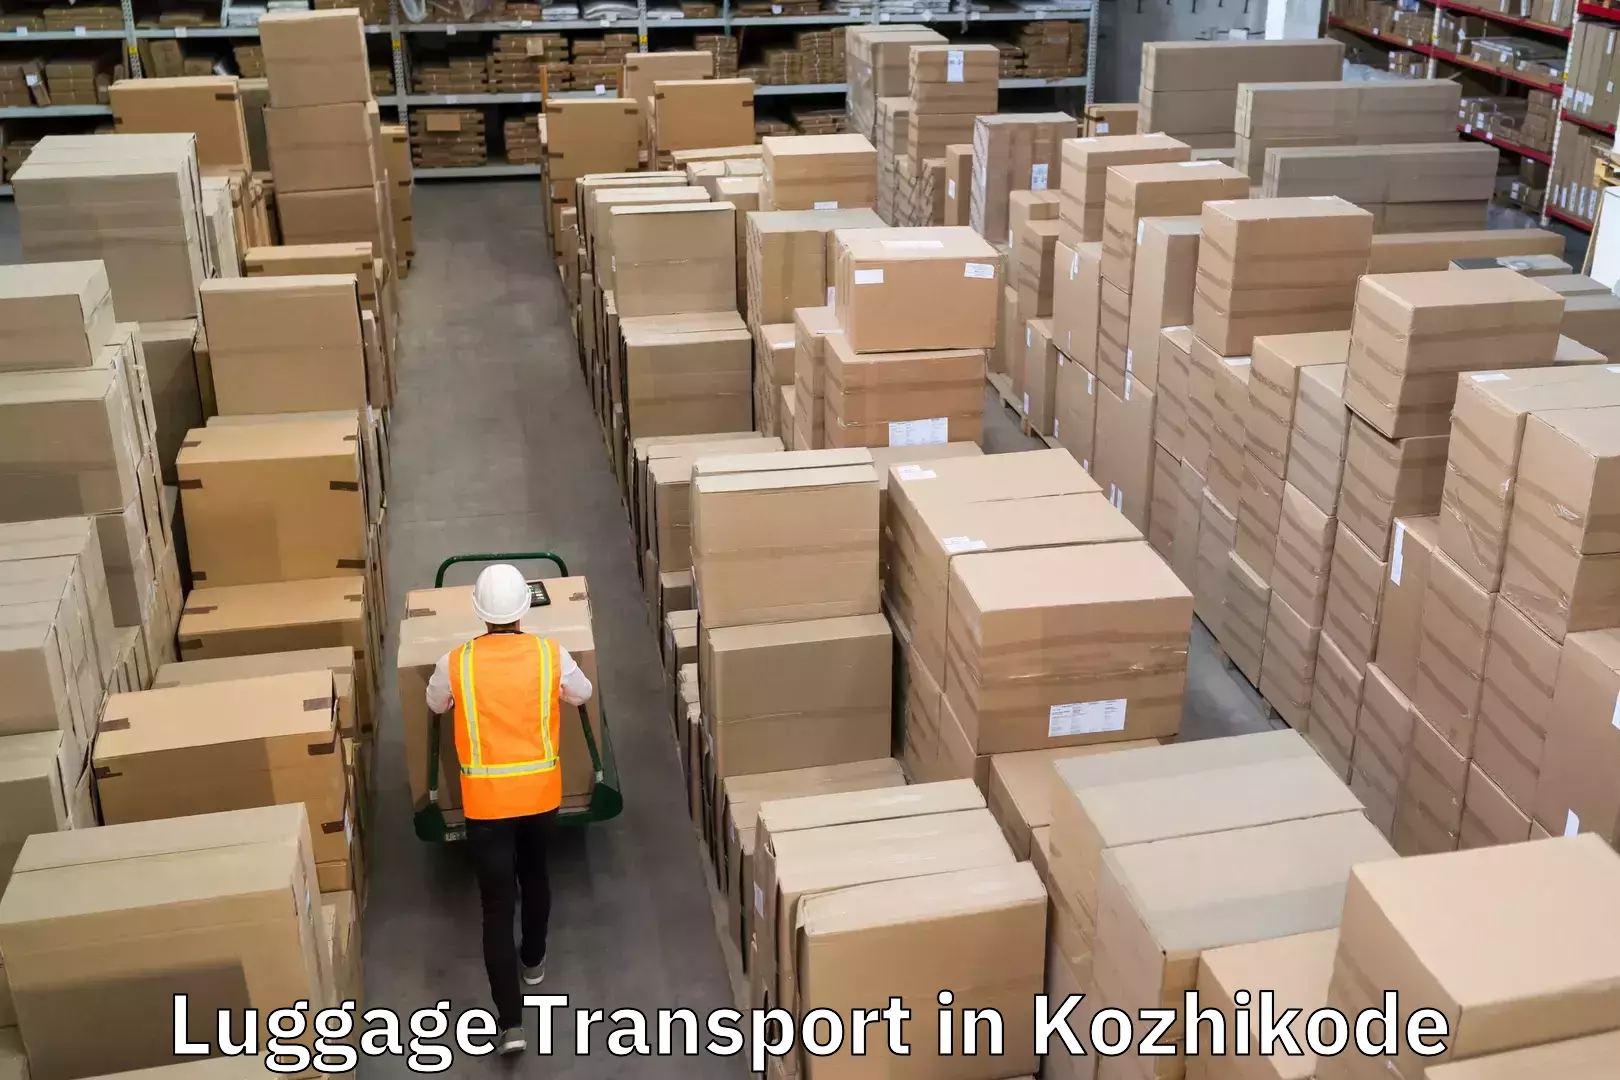 Multi-destination luggage transport in Kozhikode